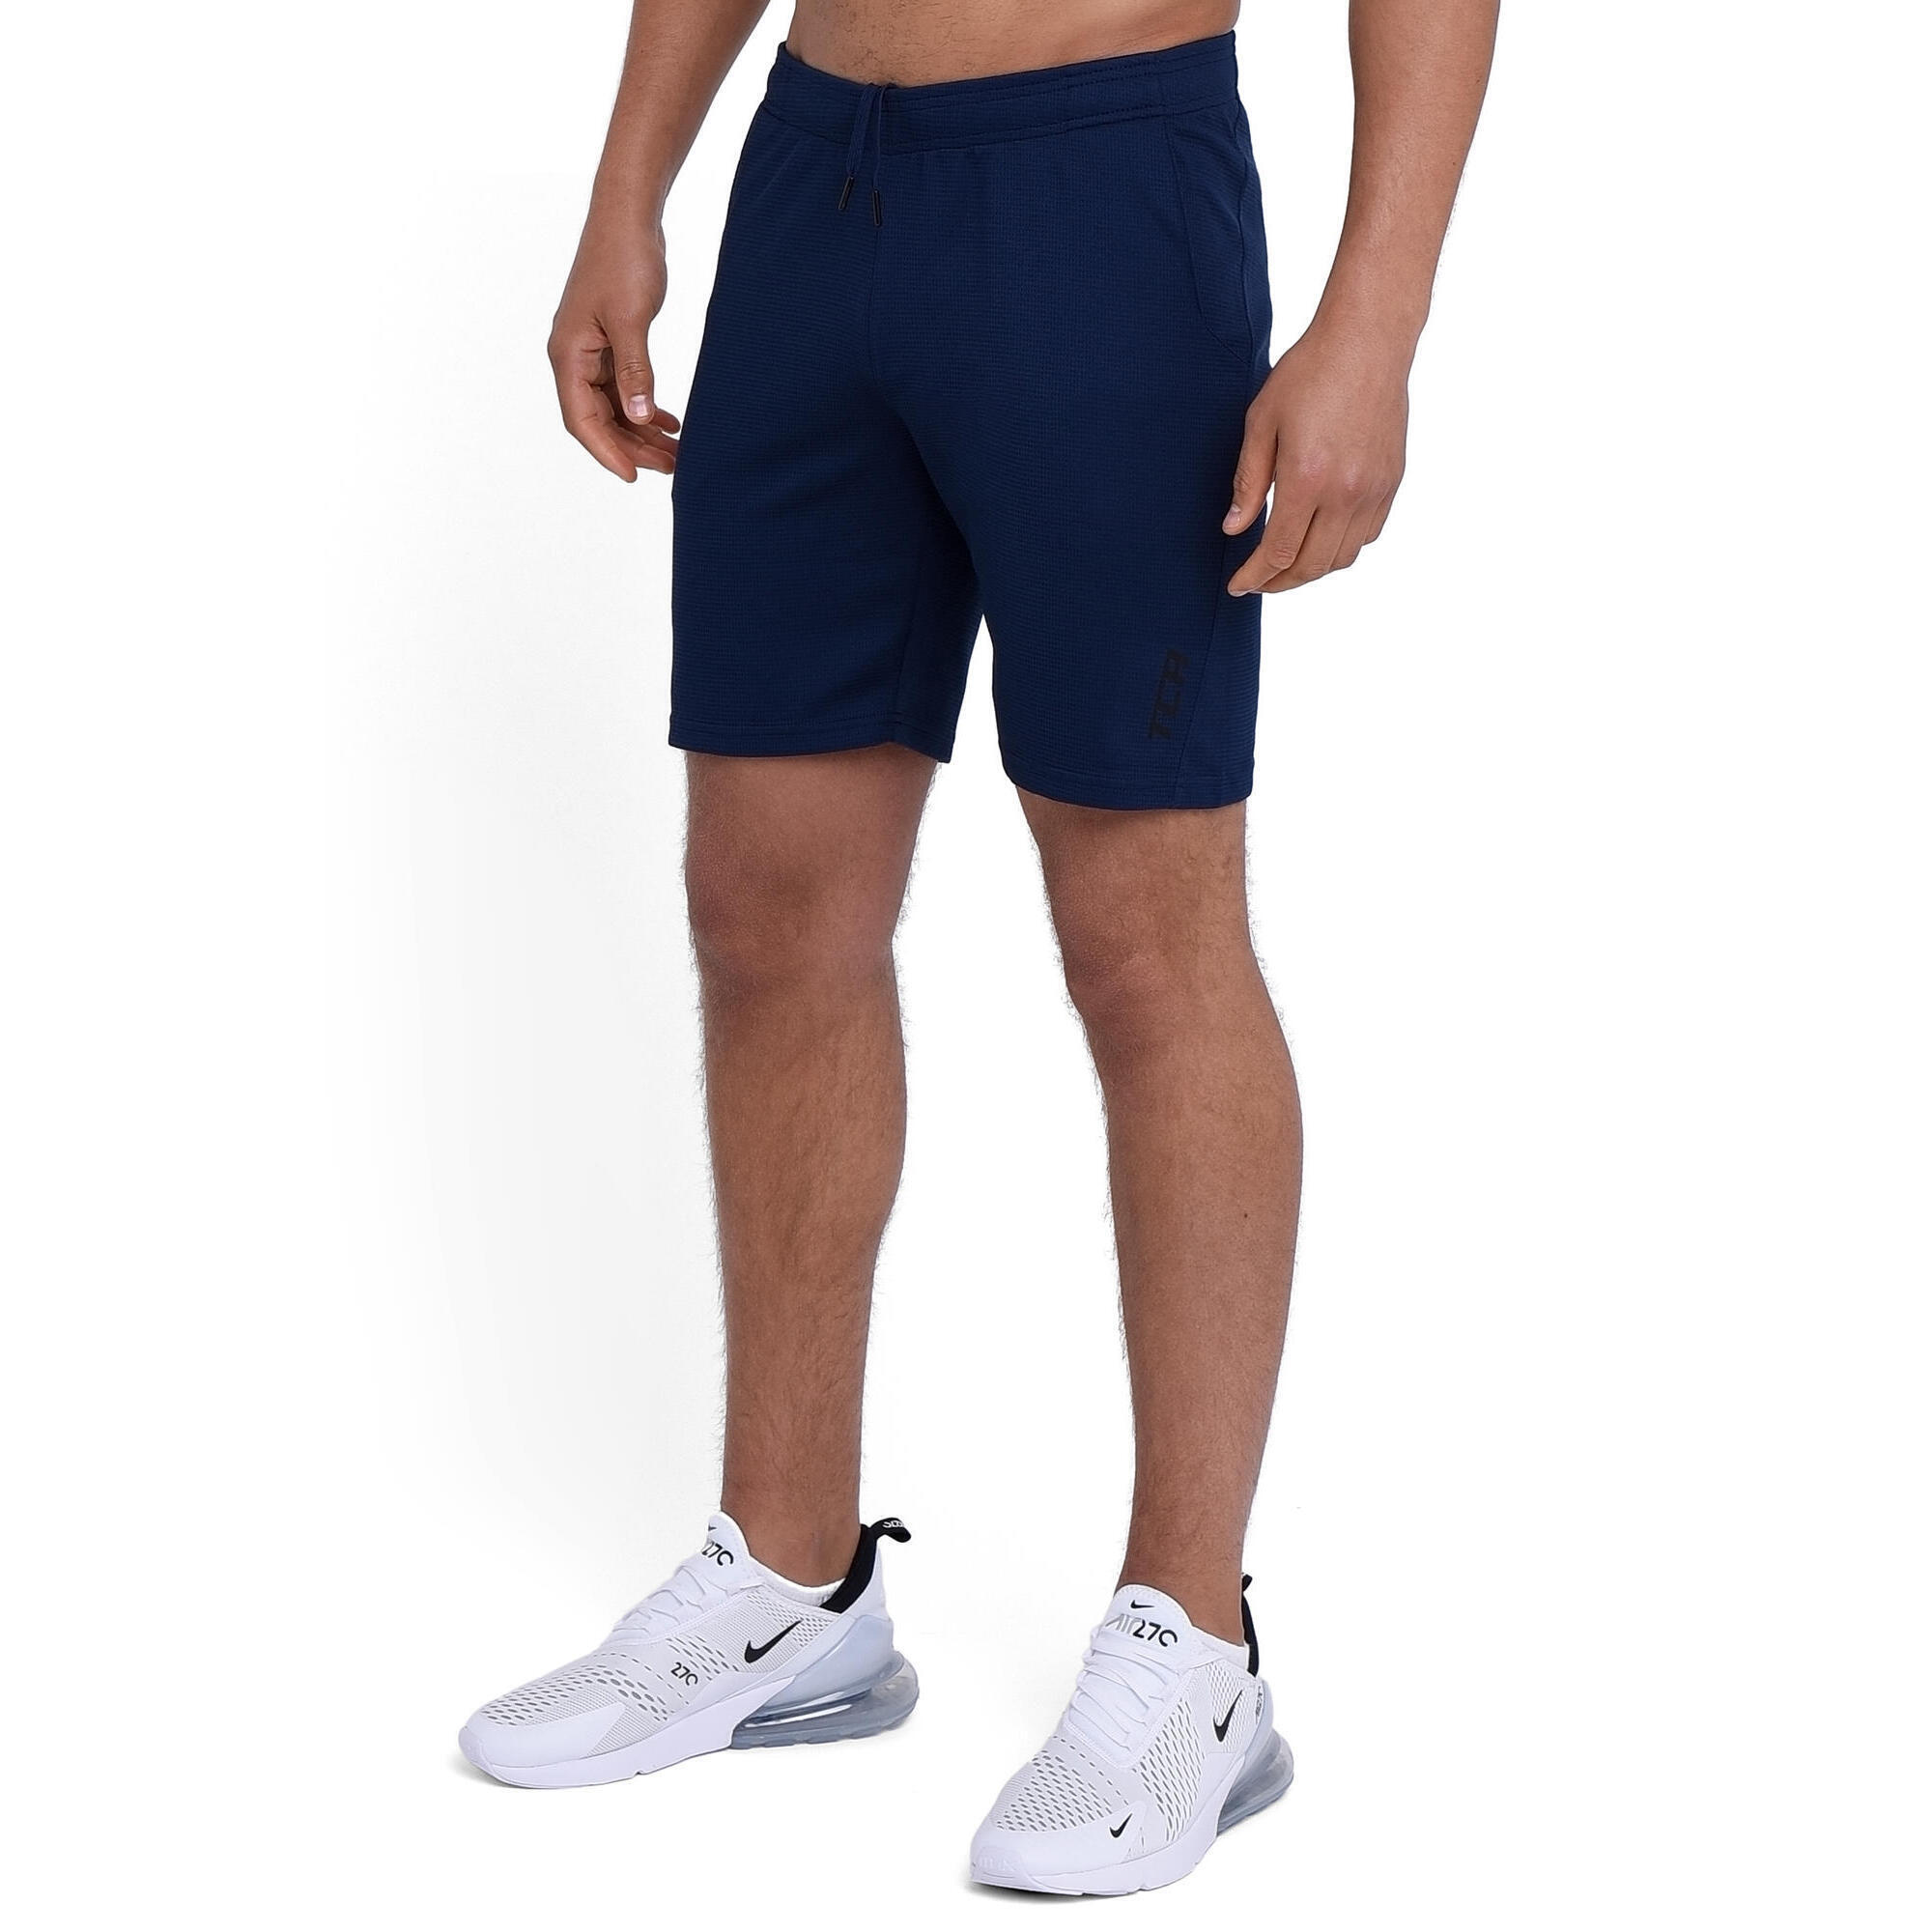 Men's Aeron Running Shorts with Pockets - Navy Eclipse 1/5